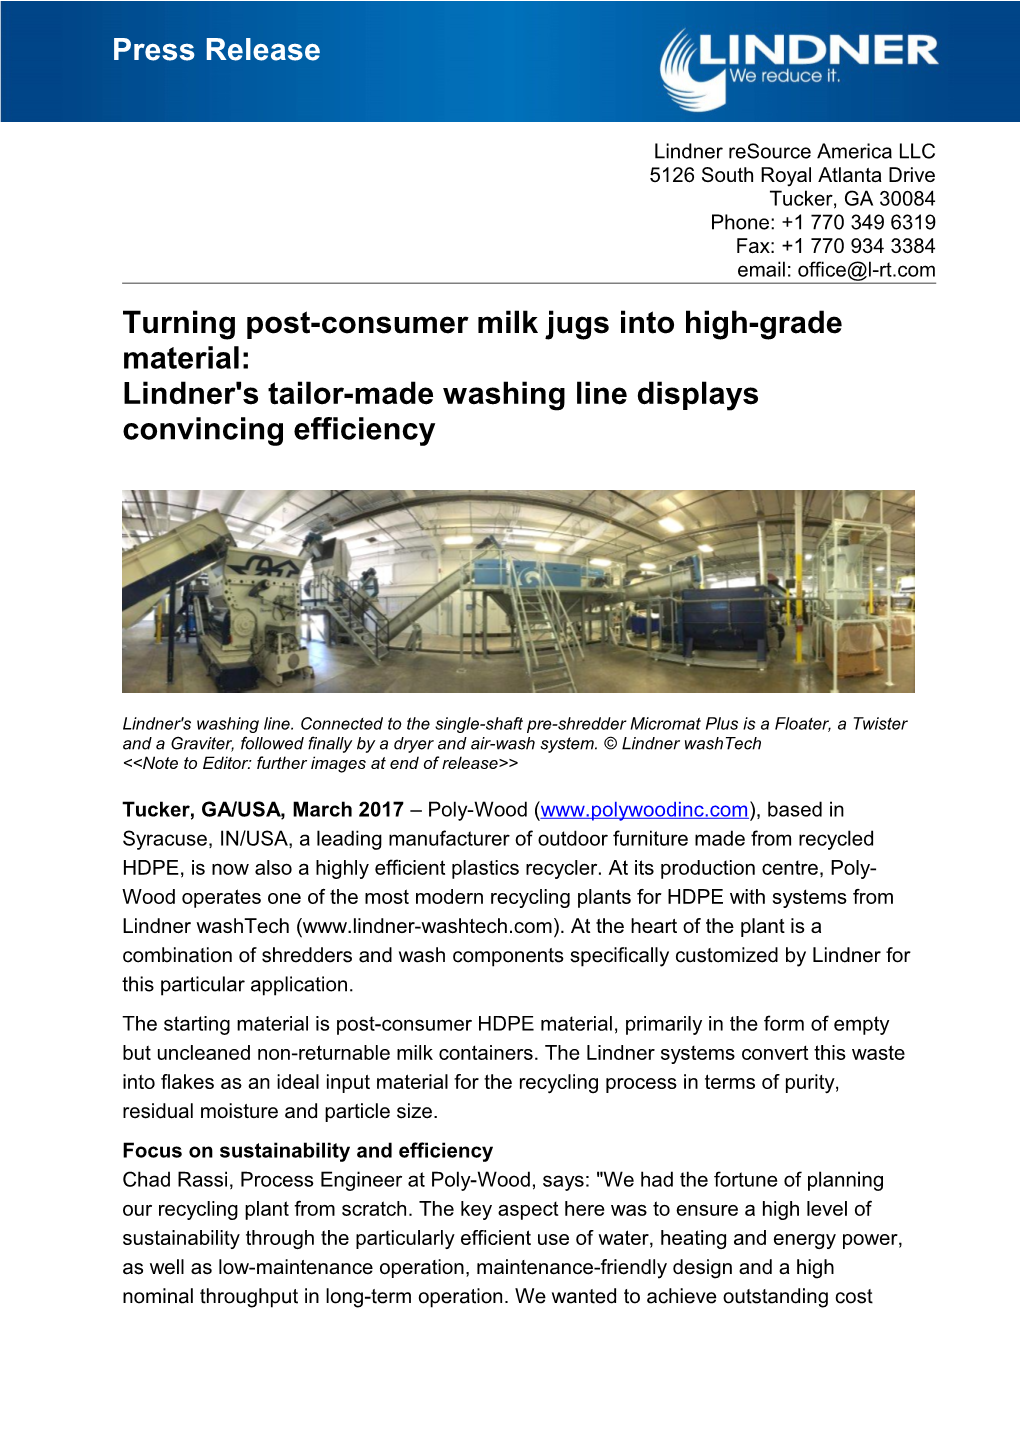 Lindner's Tailor-Made Washing Line Displays Convincing Efficiency